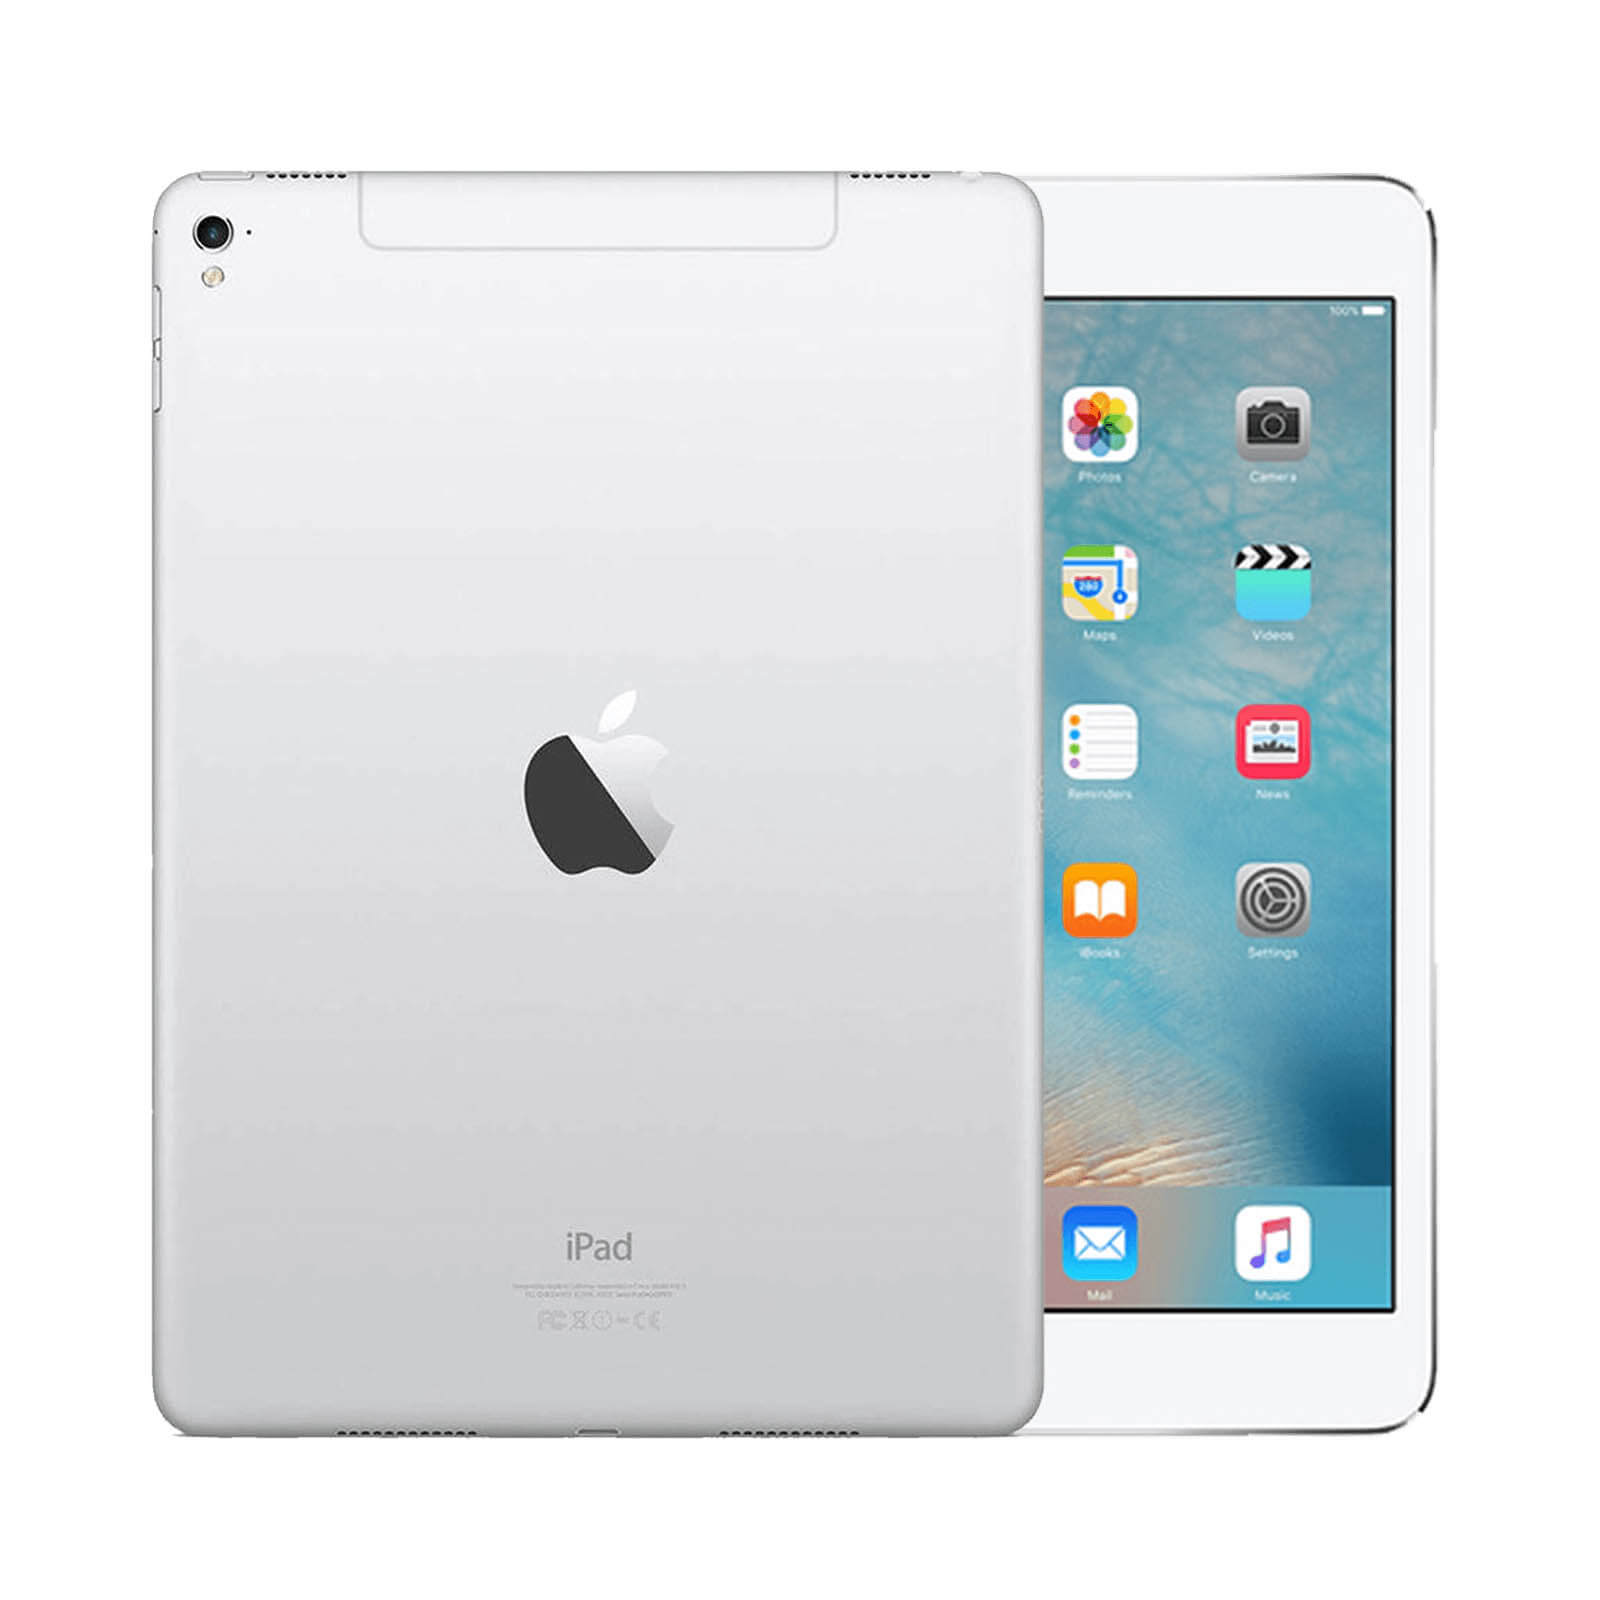 Ristrutturatoished Apple iPad 7 128GB WiFi Argento Come Nuovo